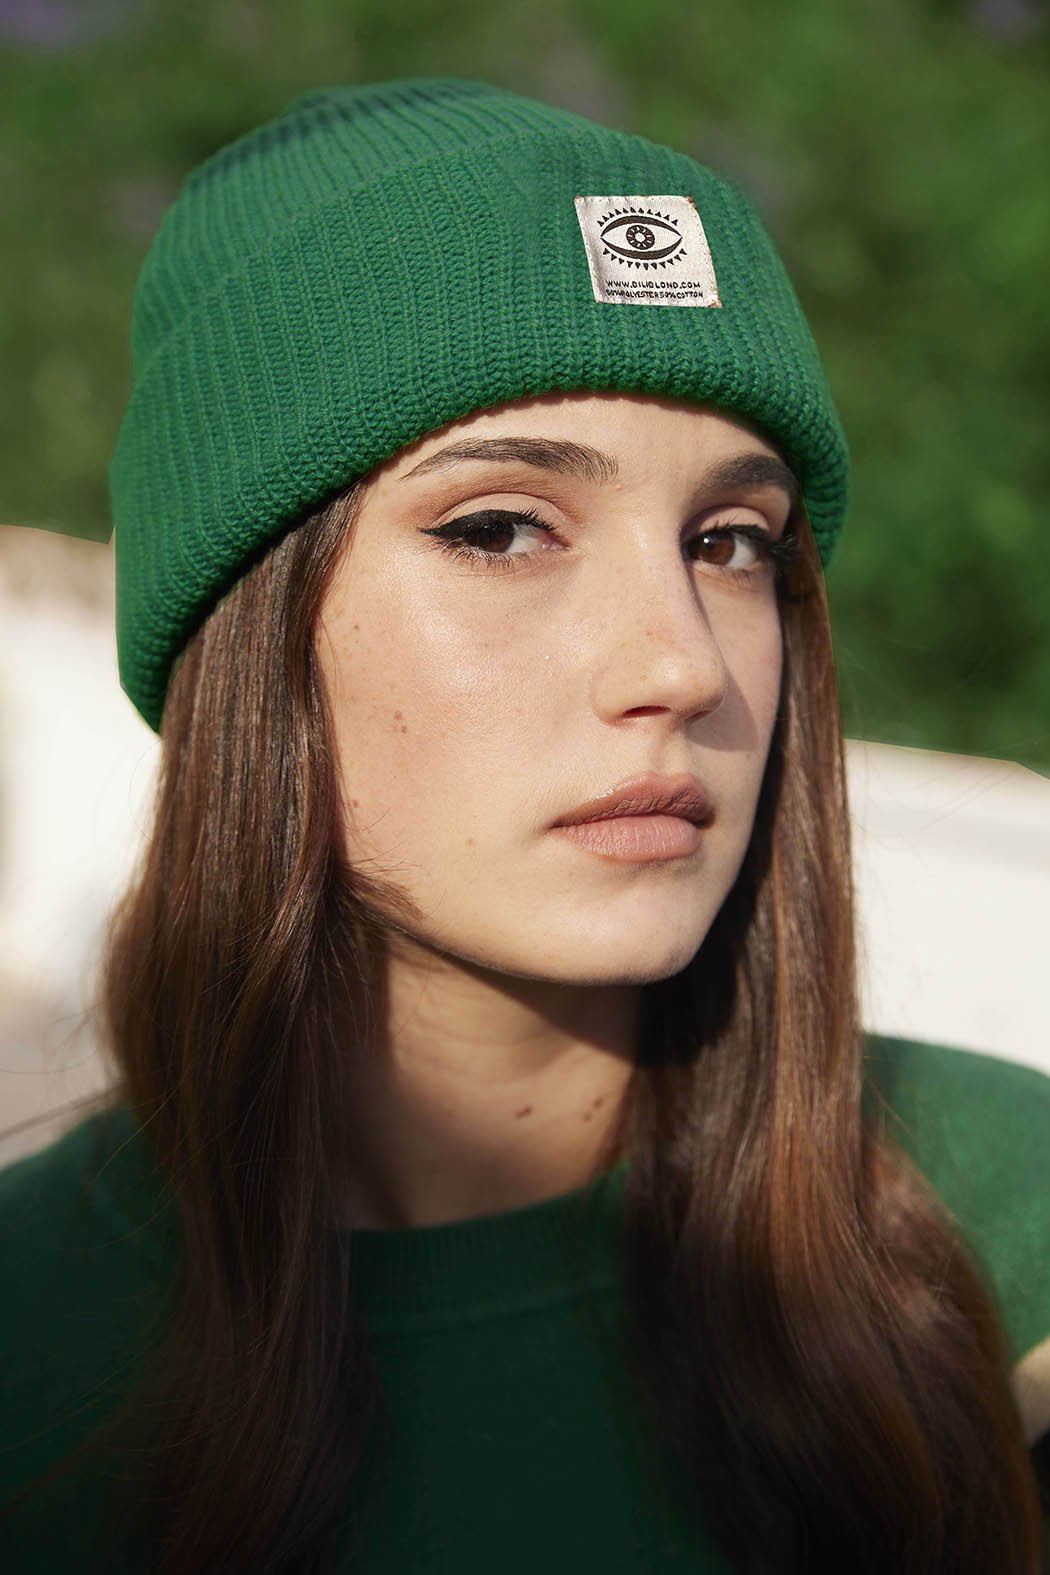 KNITTED GREEN HAT - knit set -BiliBlond LTD